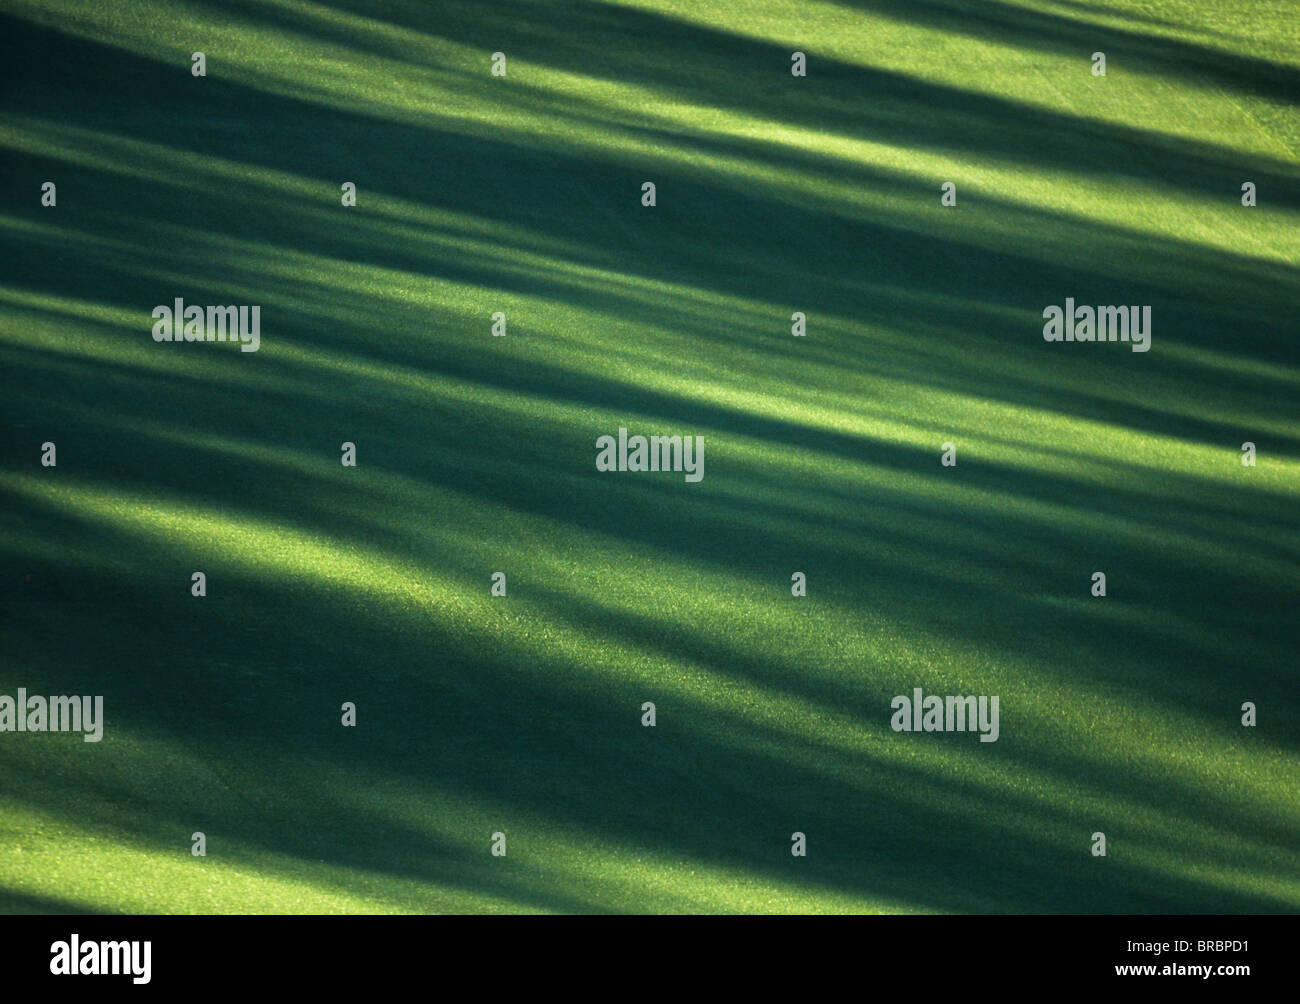 Shadows create lines of design across golf fairway Stock Photo